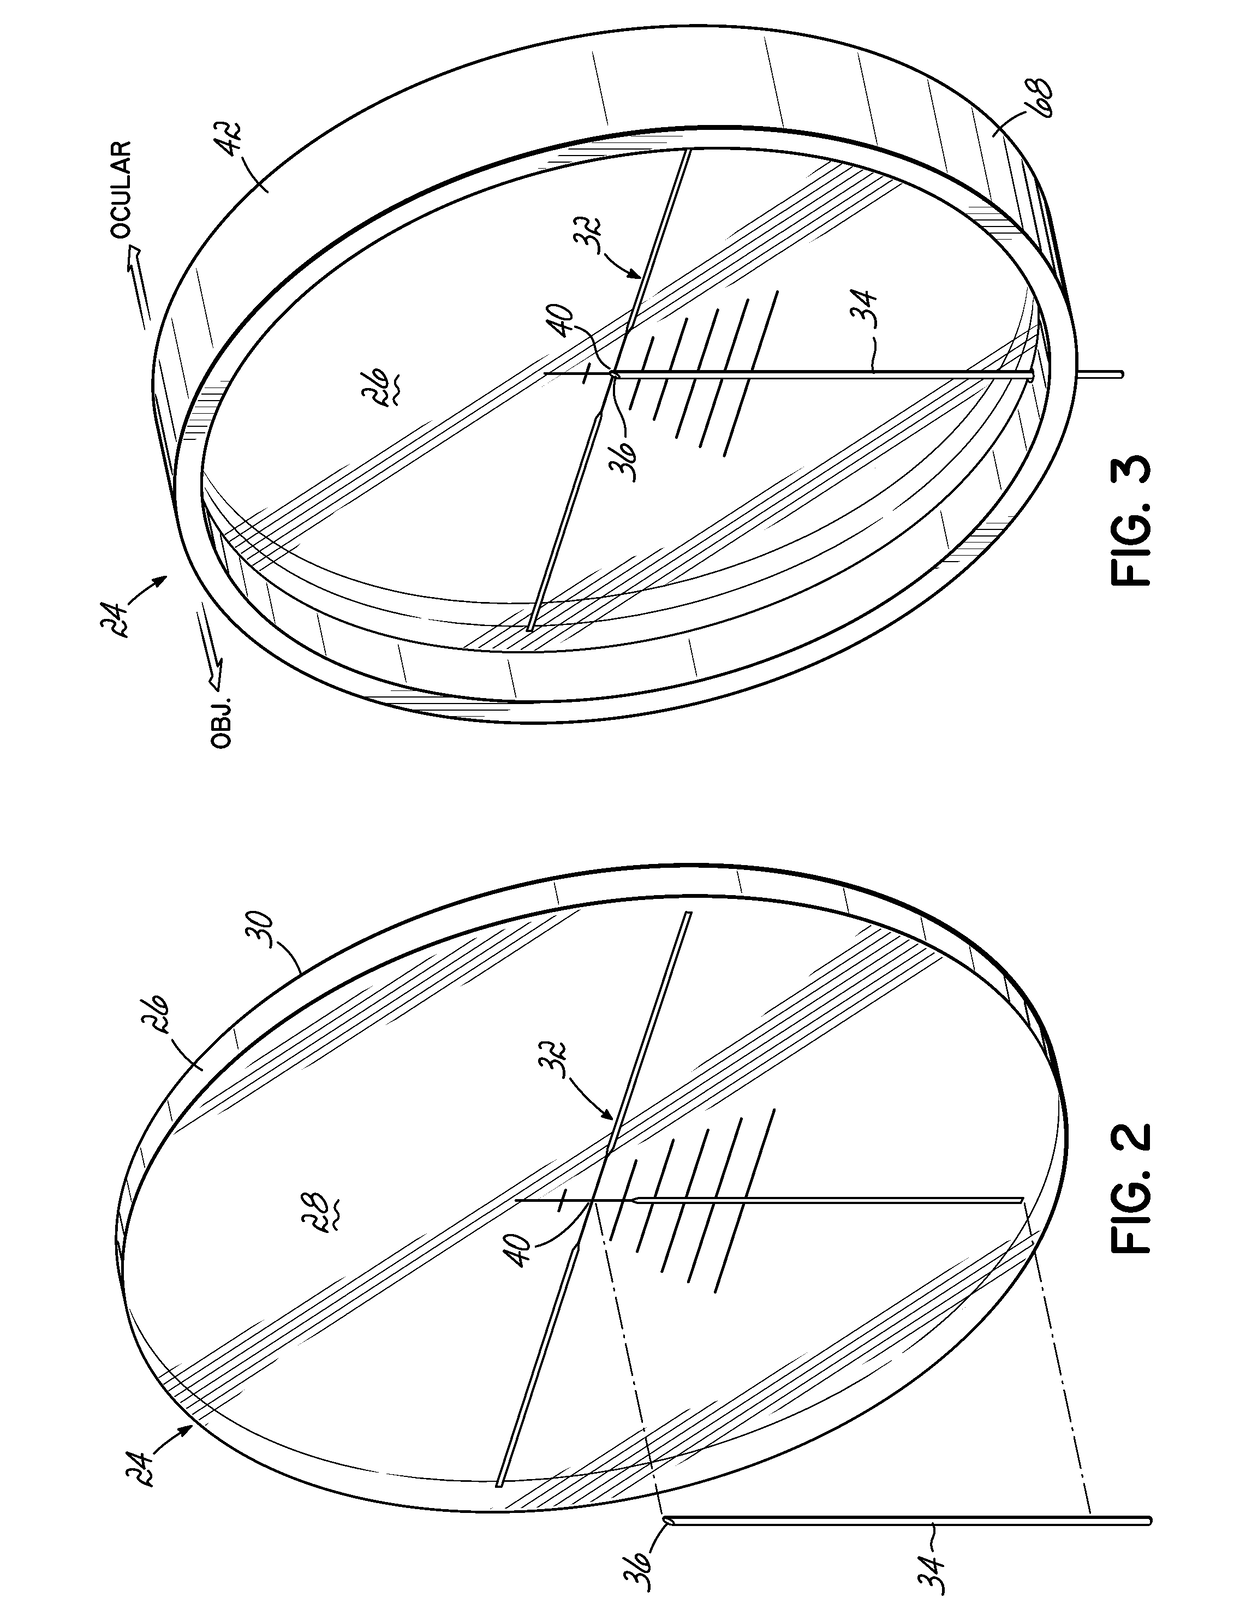 Reticle disc with fiber illuminated aiming dot